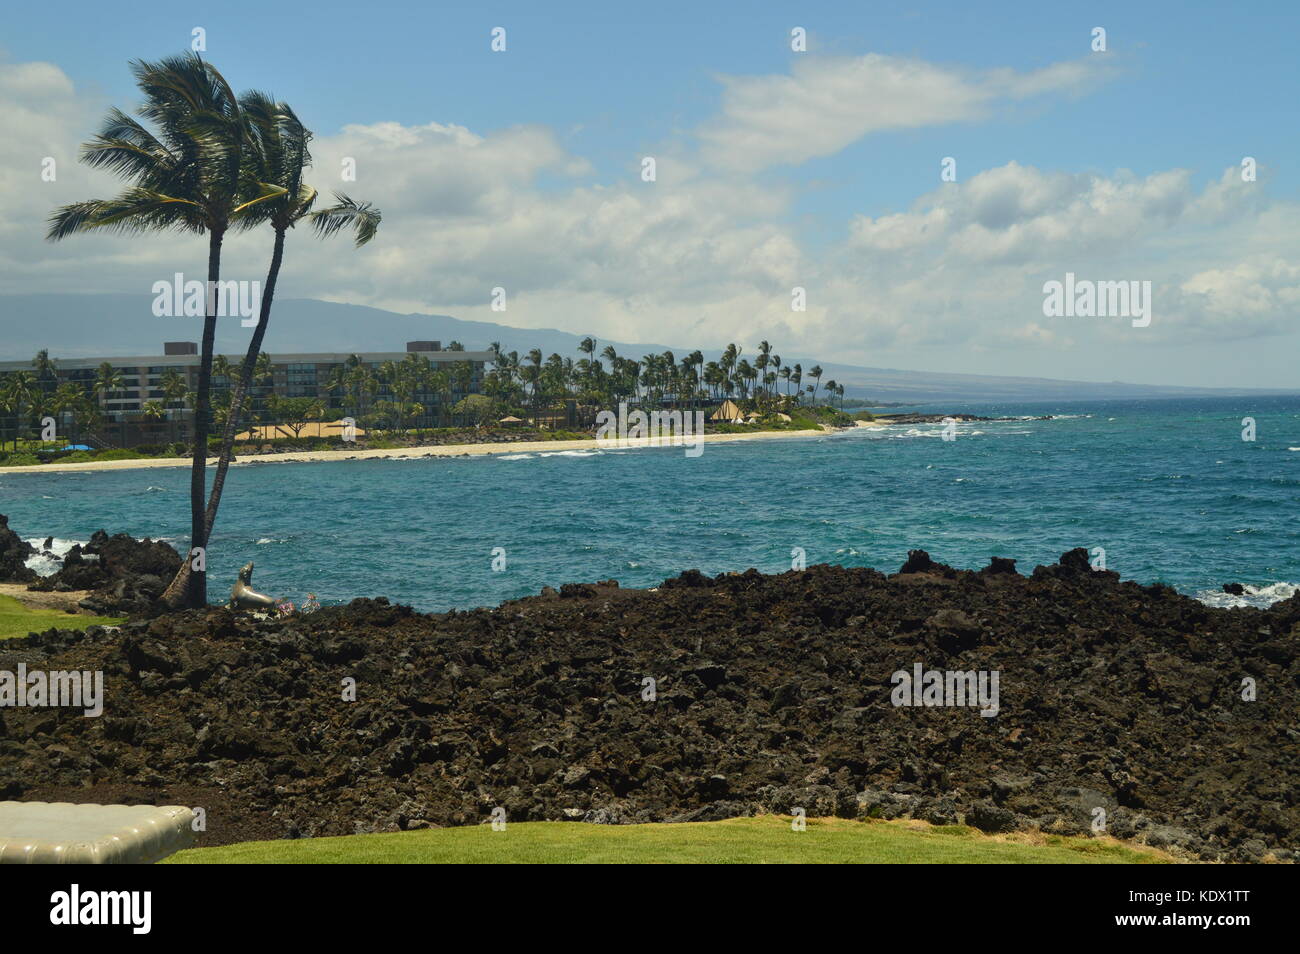 PALM IN HAWAII Stock Photo